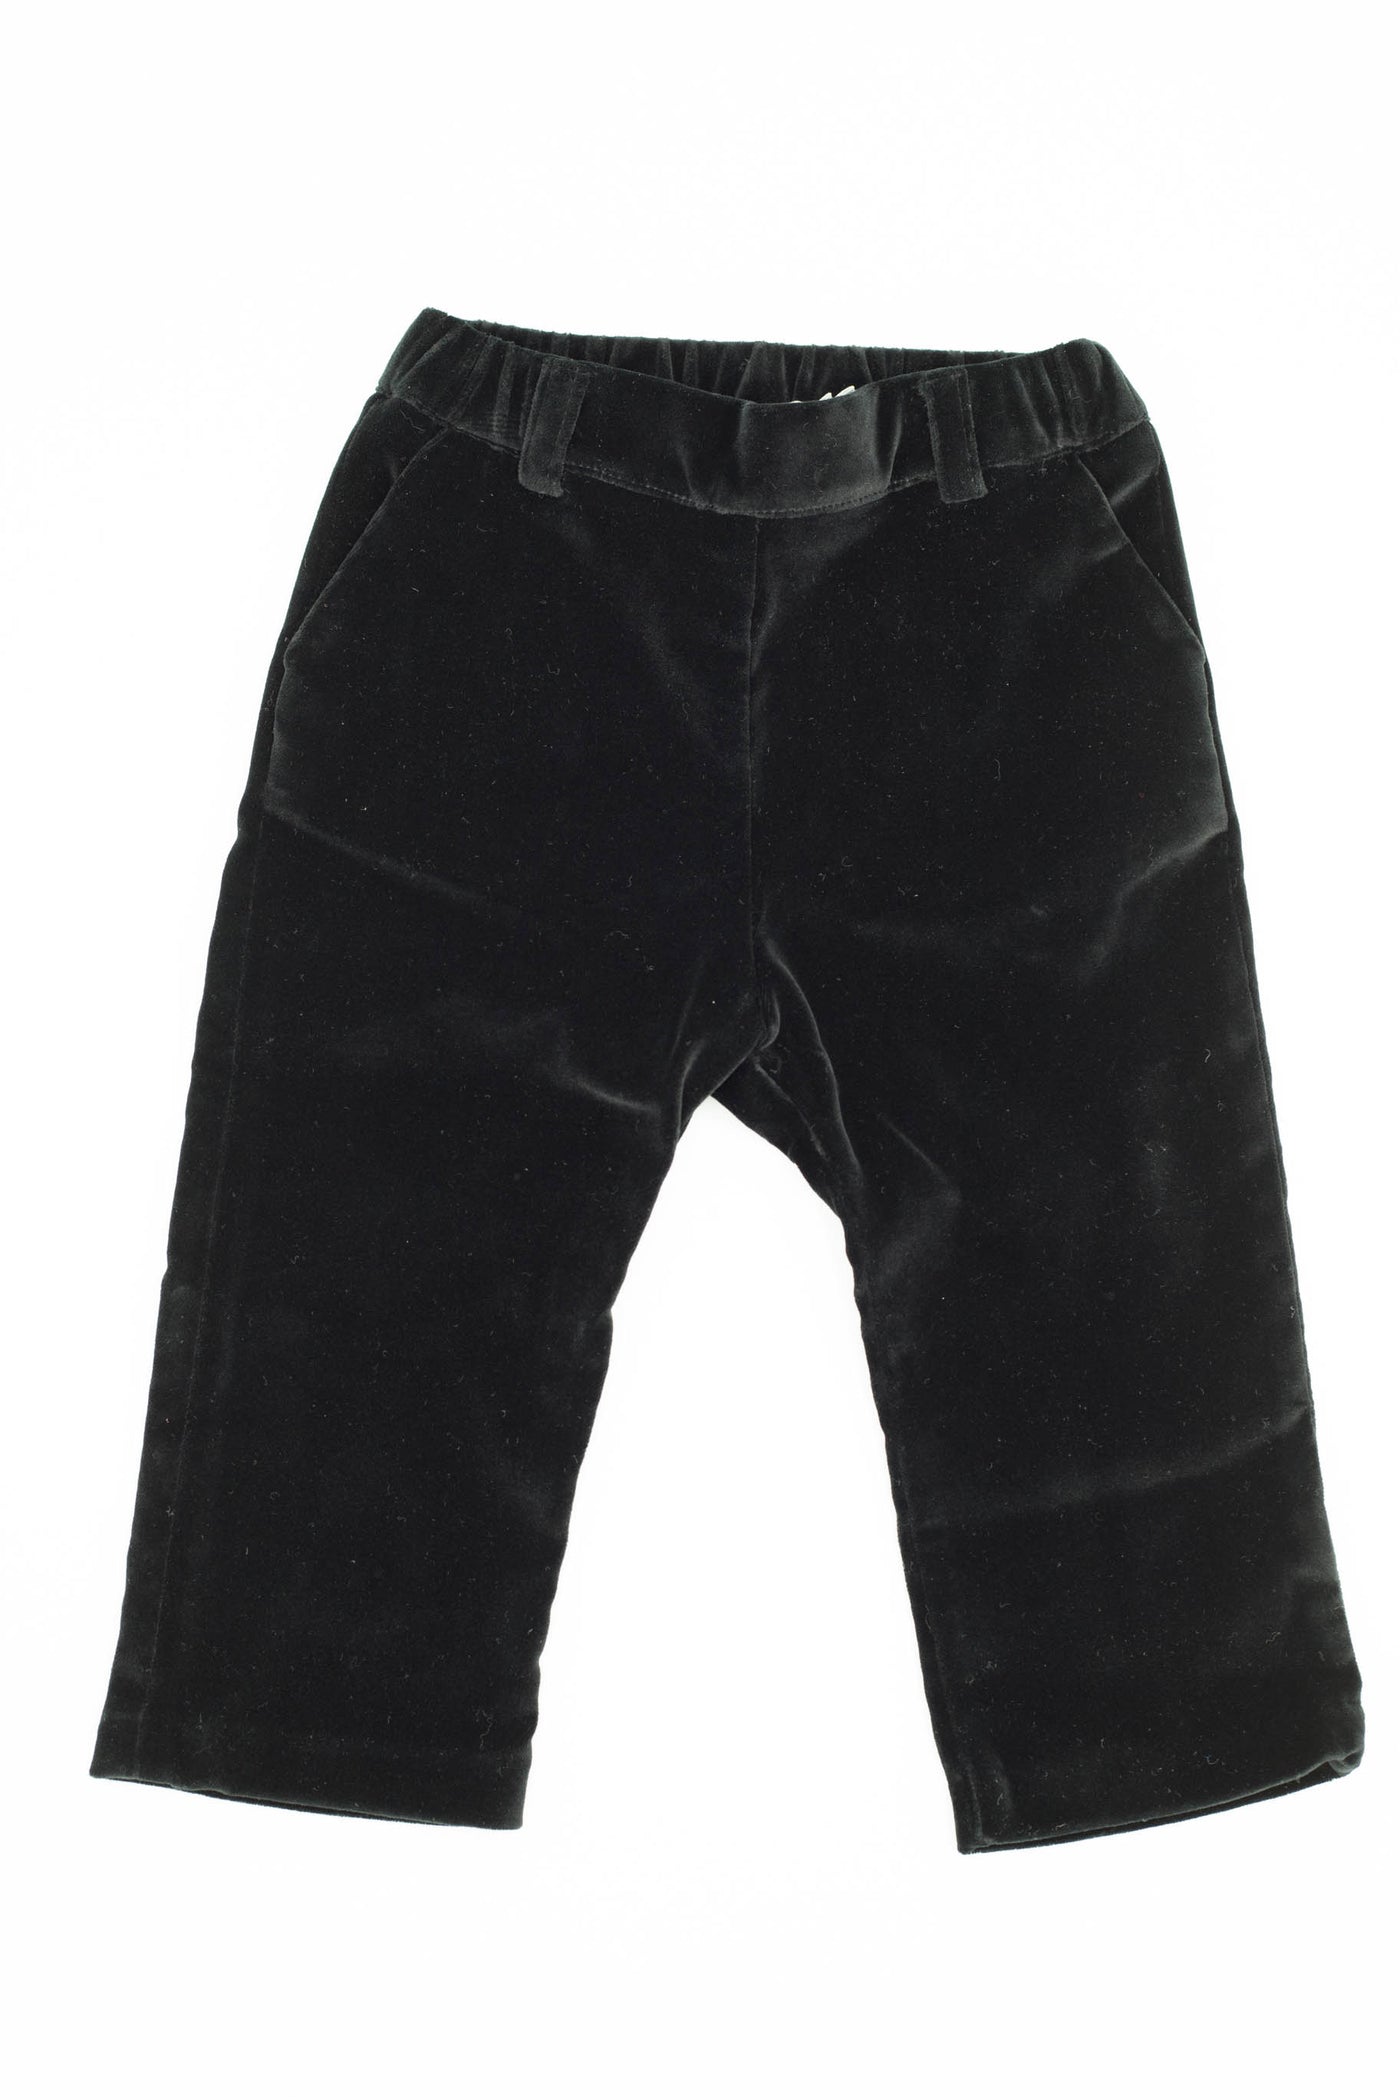 Baby Dior – Black Pants